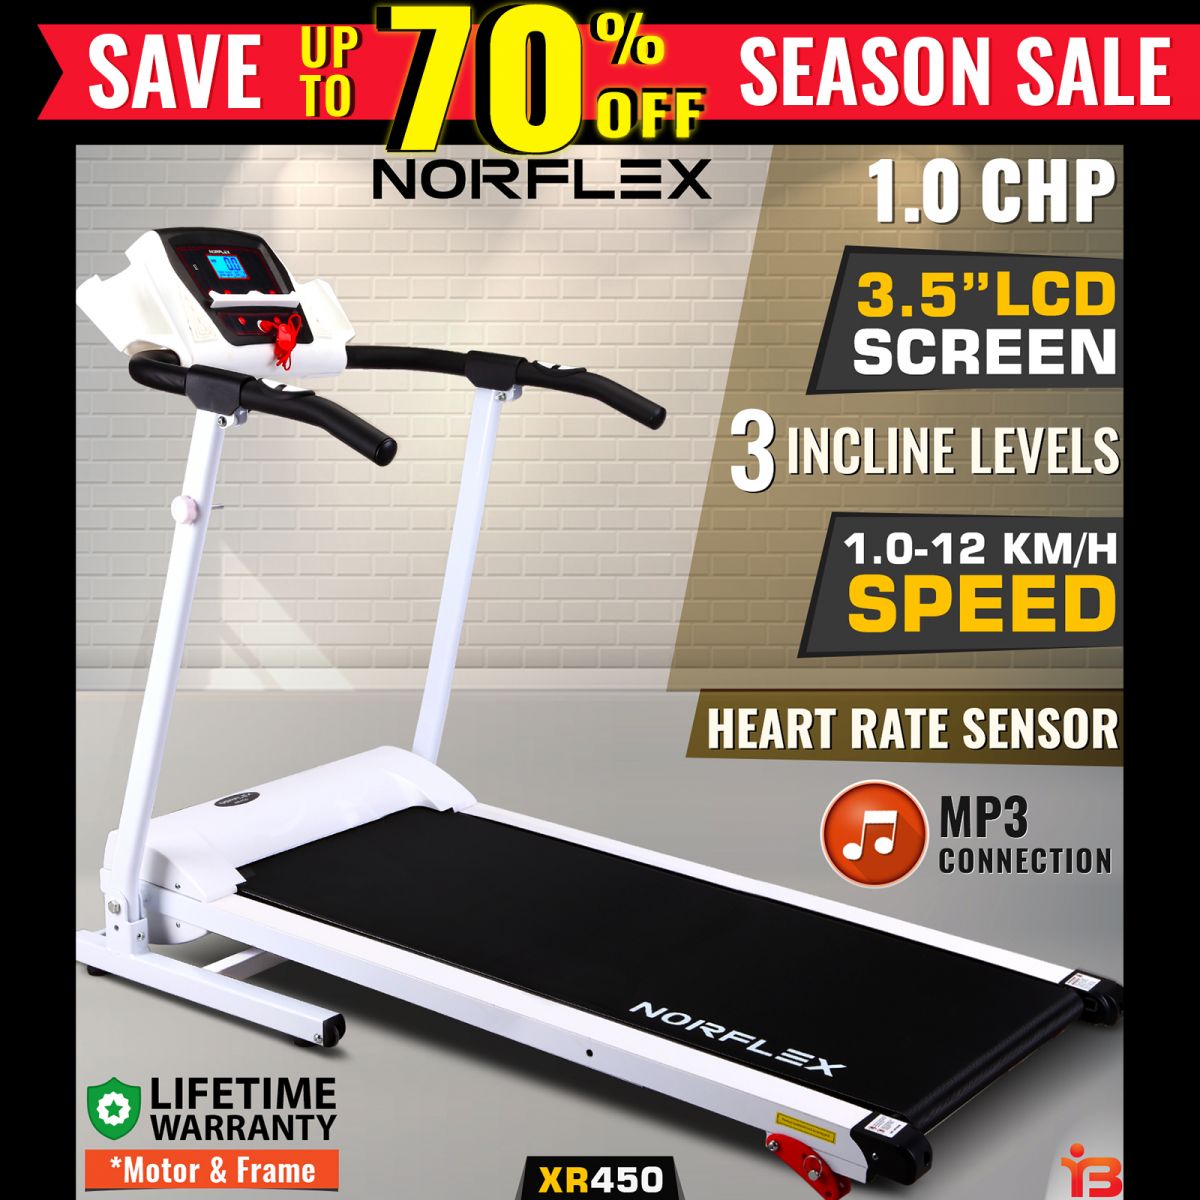 Norflex XR450 1.0 CHP Electric Treadmill